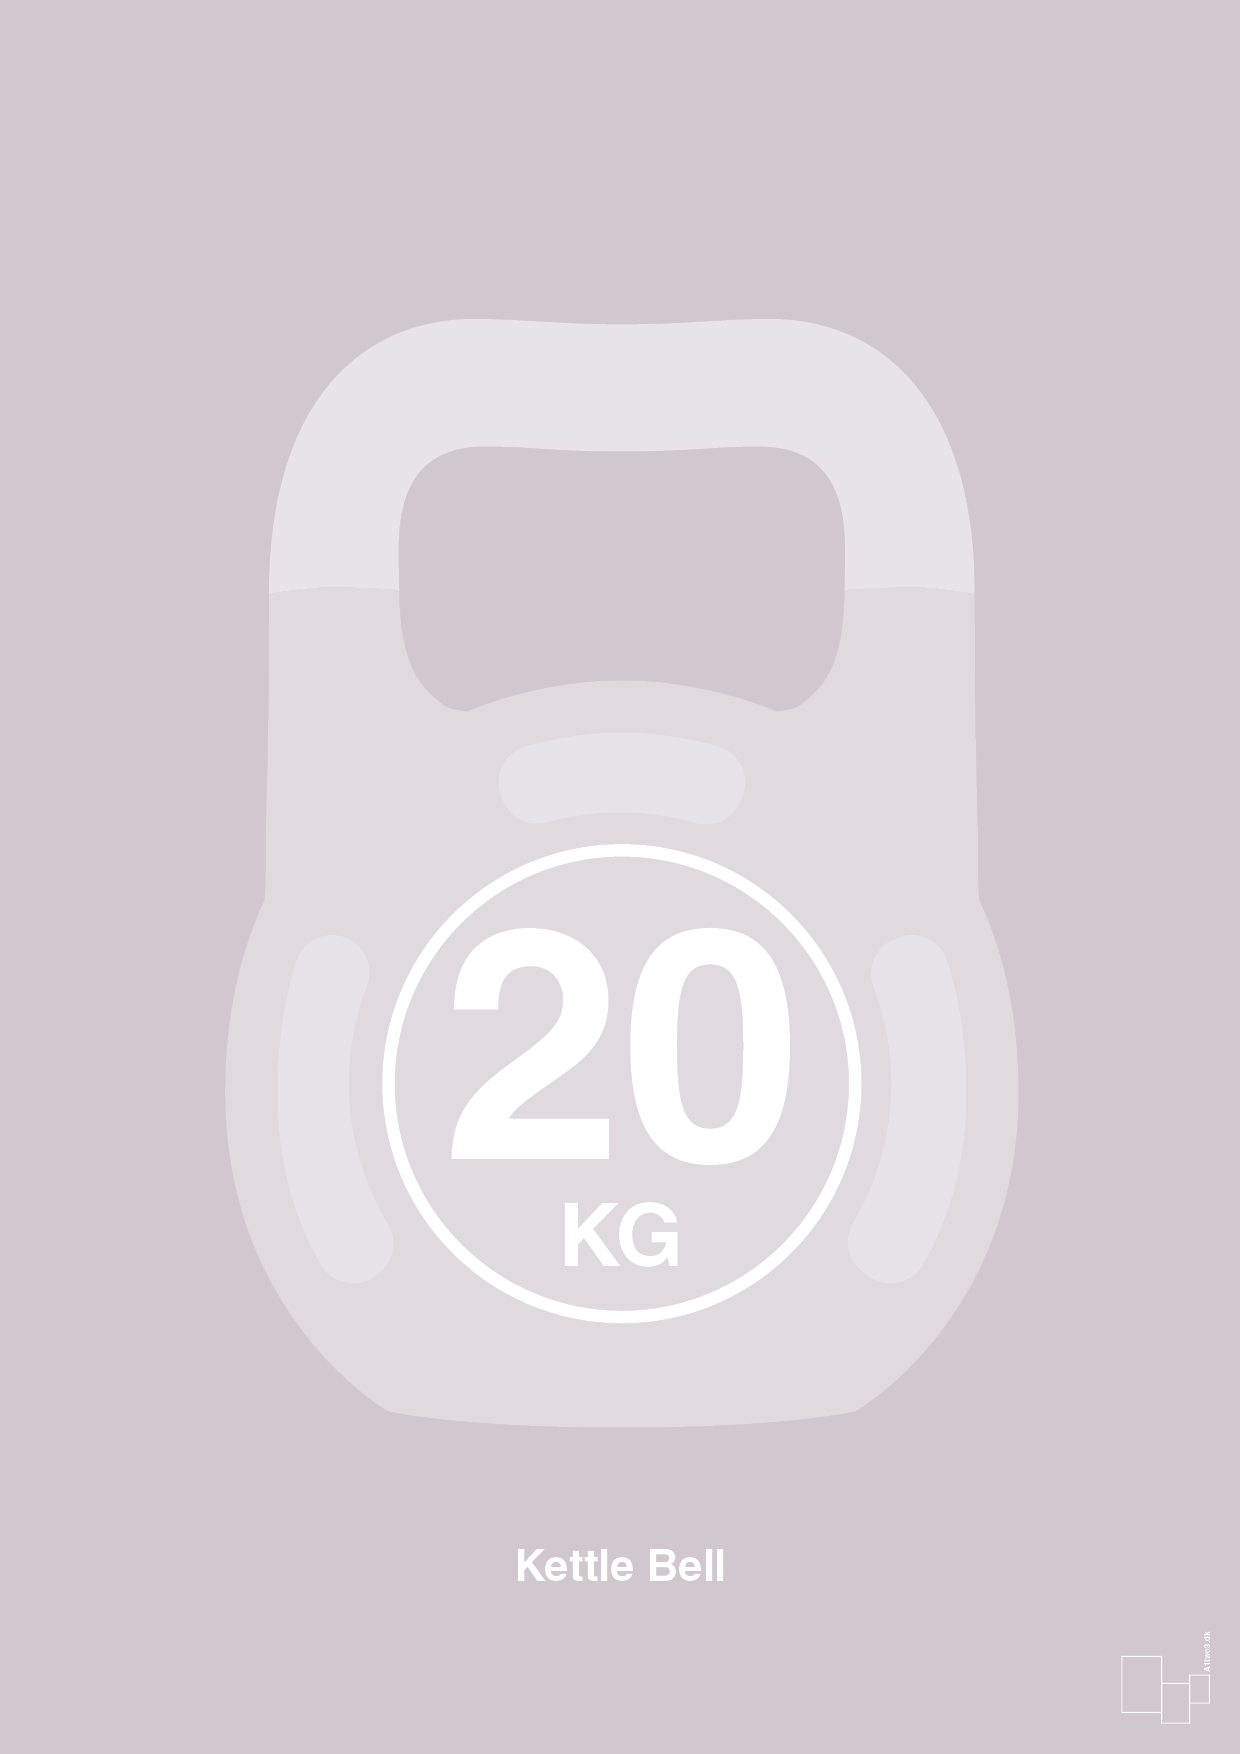 kettle bell 20 kg - Plakat med Grafik i Dusty Lilac